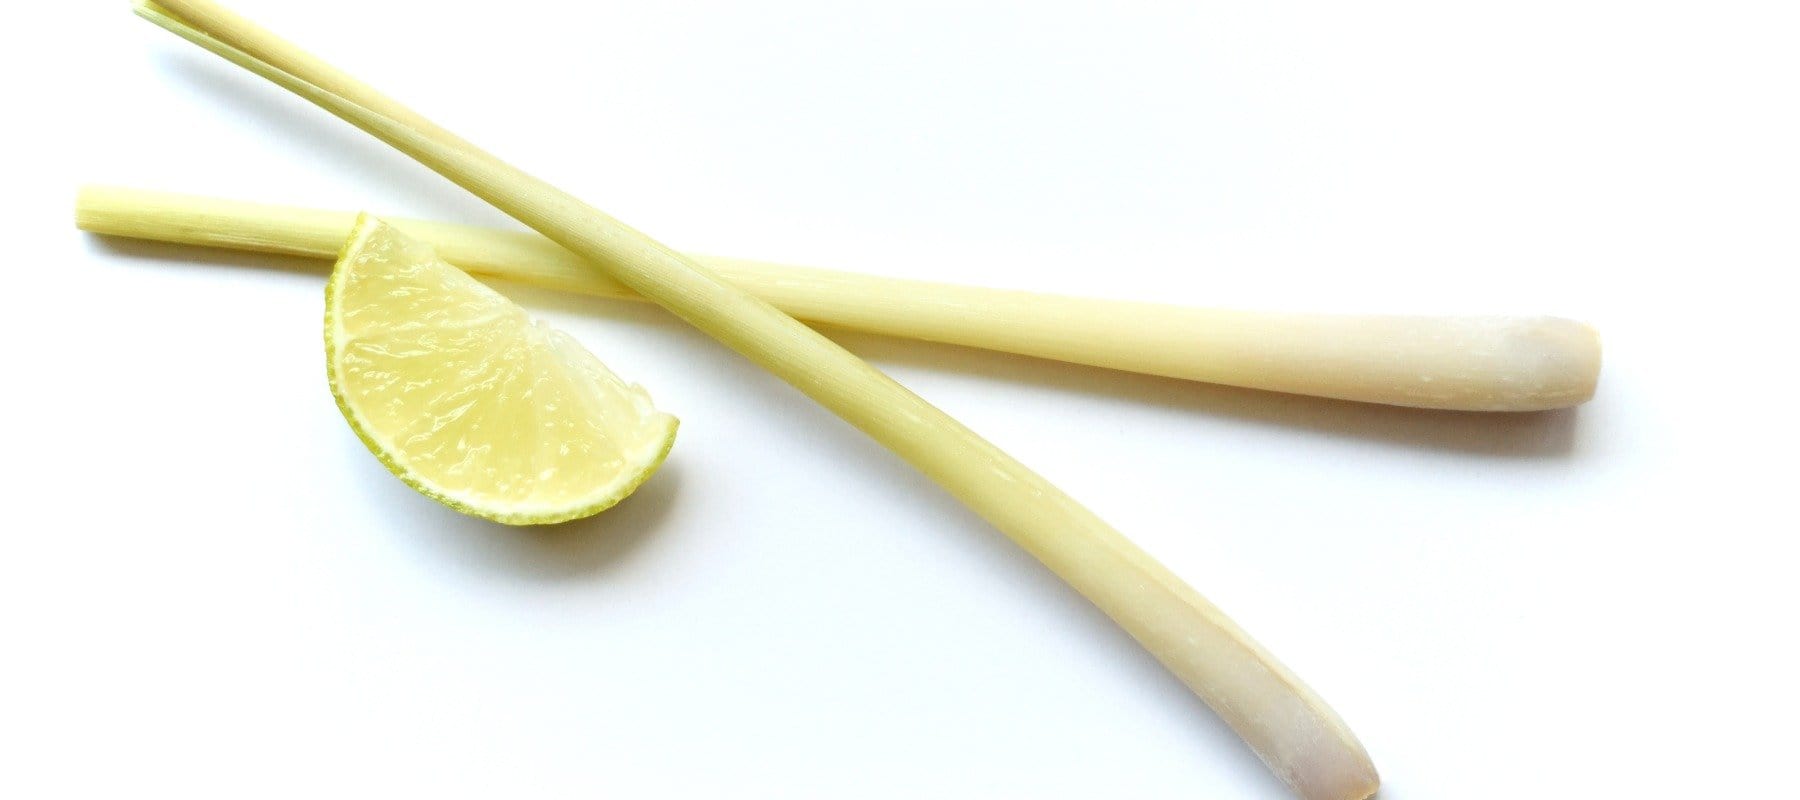 Stalks of lemongrass with a lemon wedge